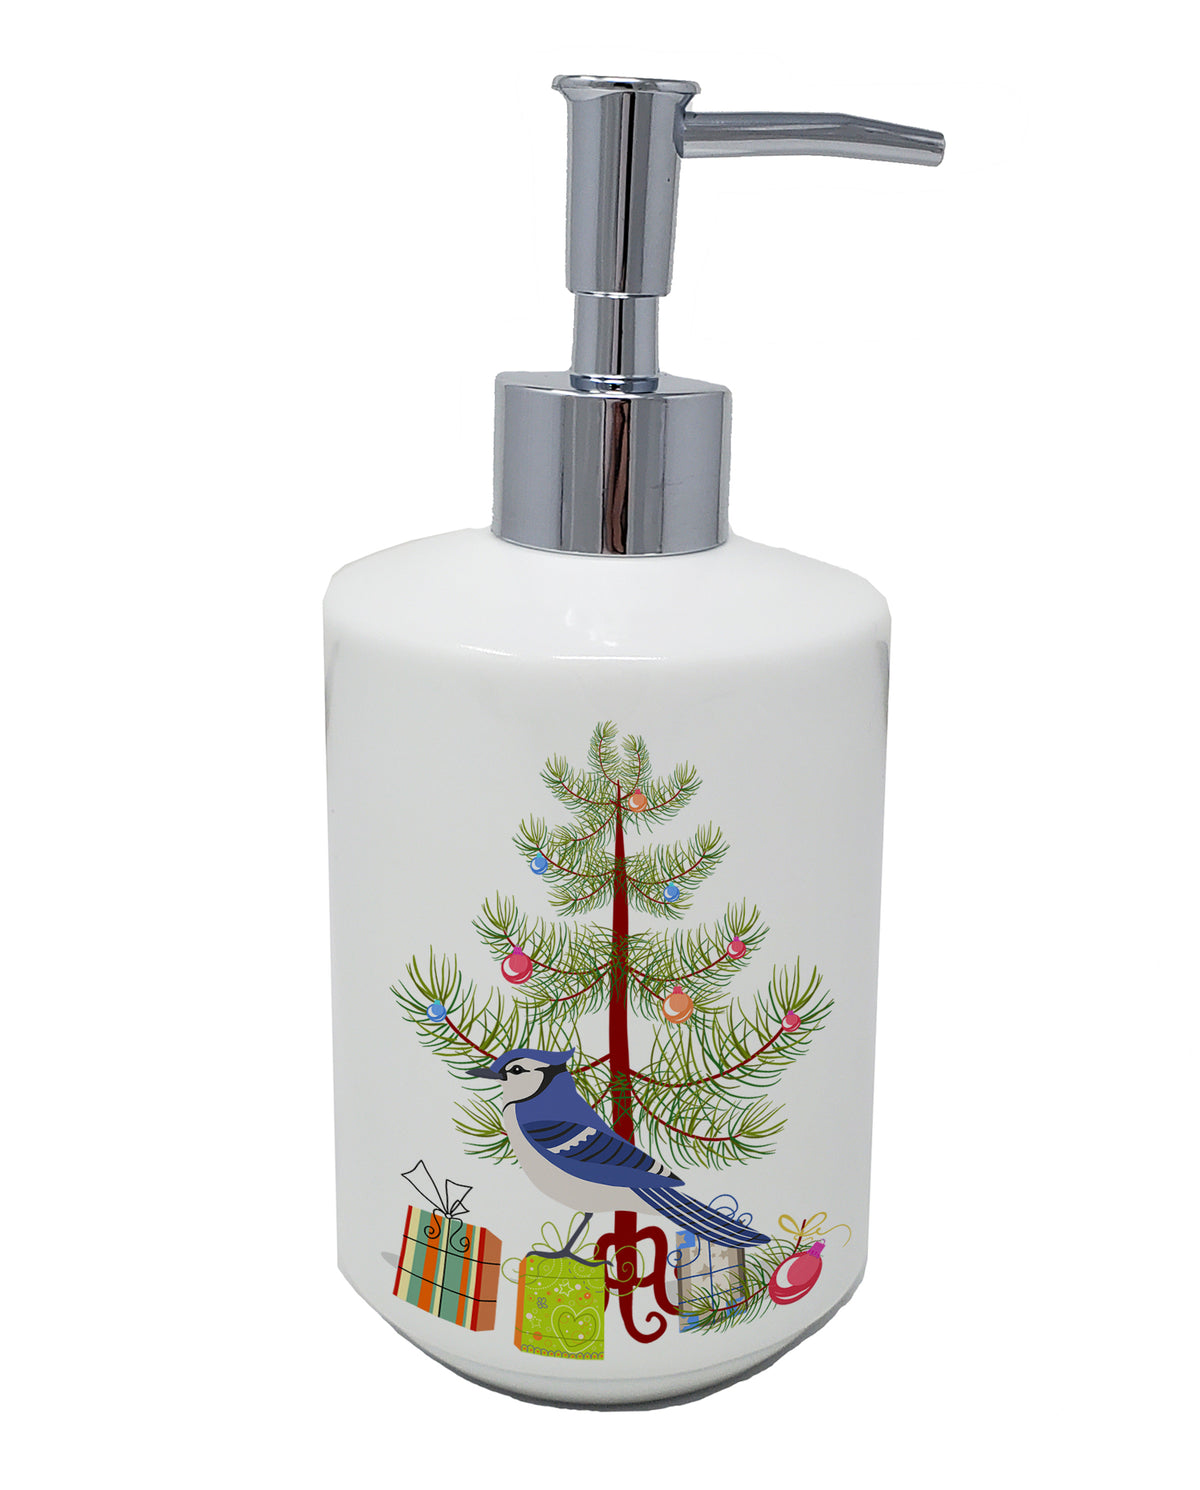 Buy this Jay Bird Merry Christmas Ceramic Soap Dispenser